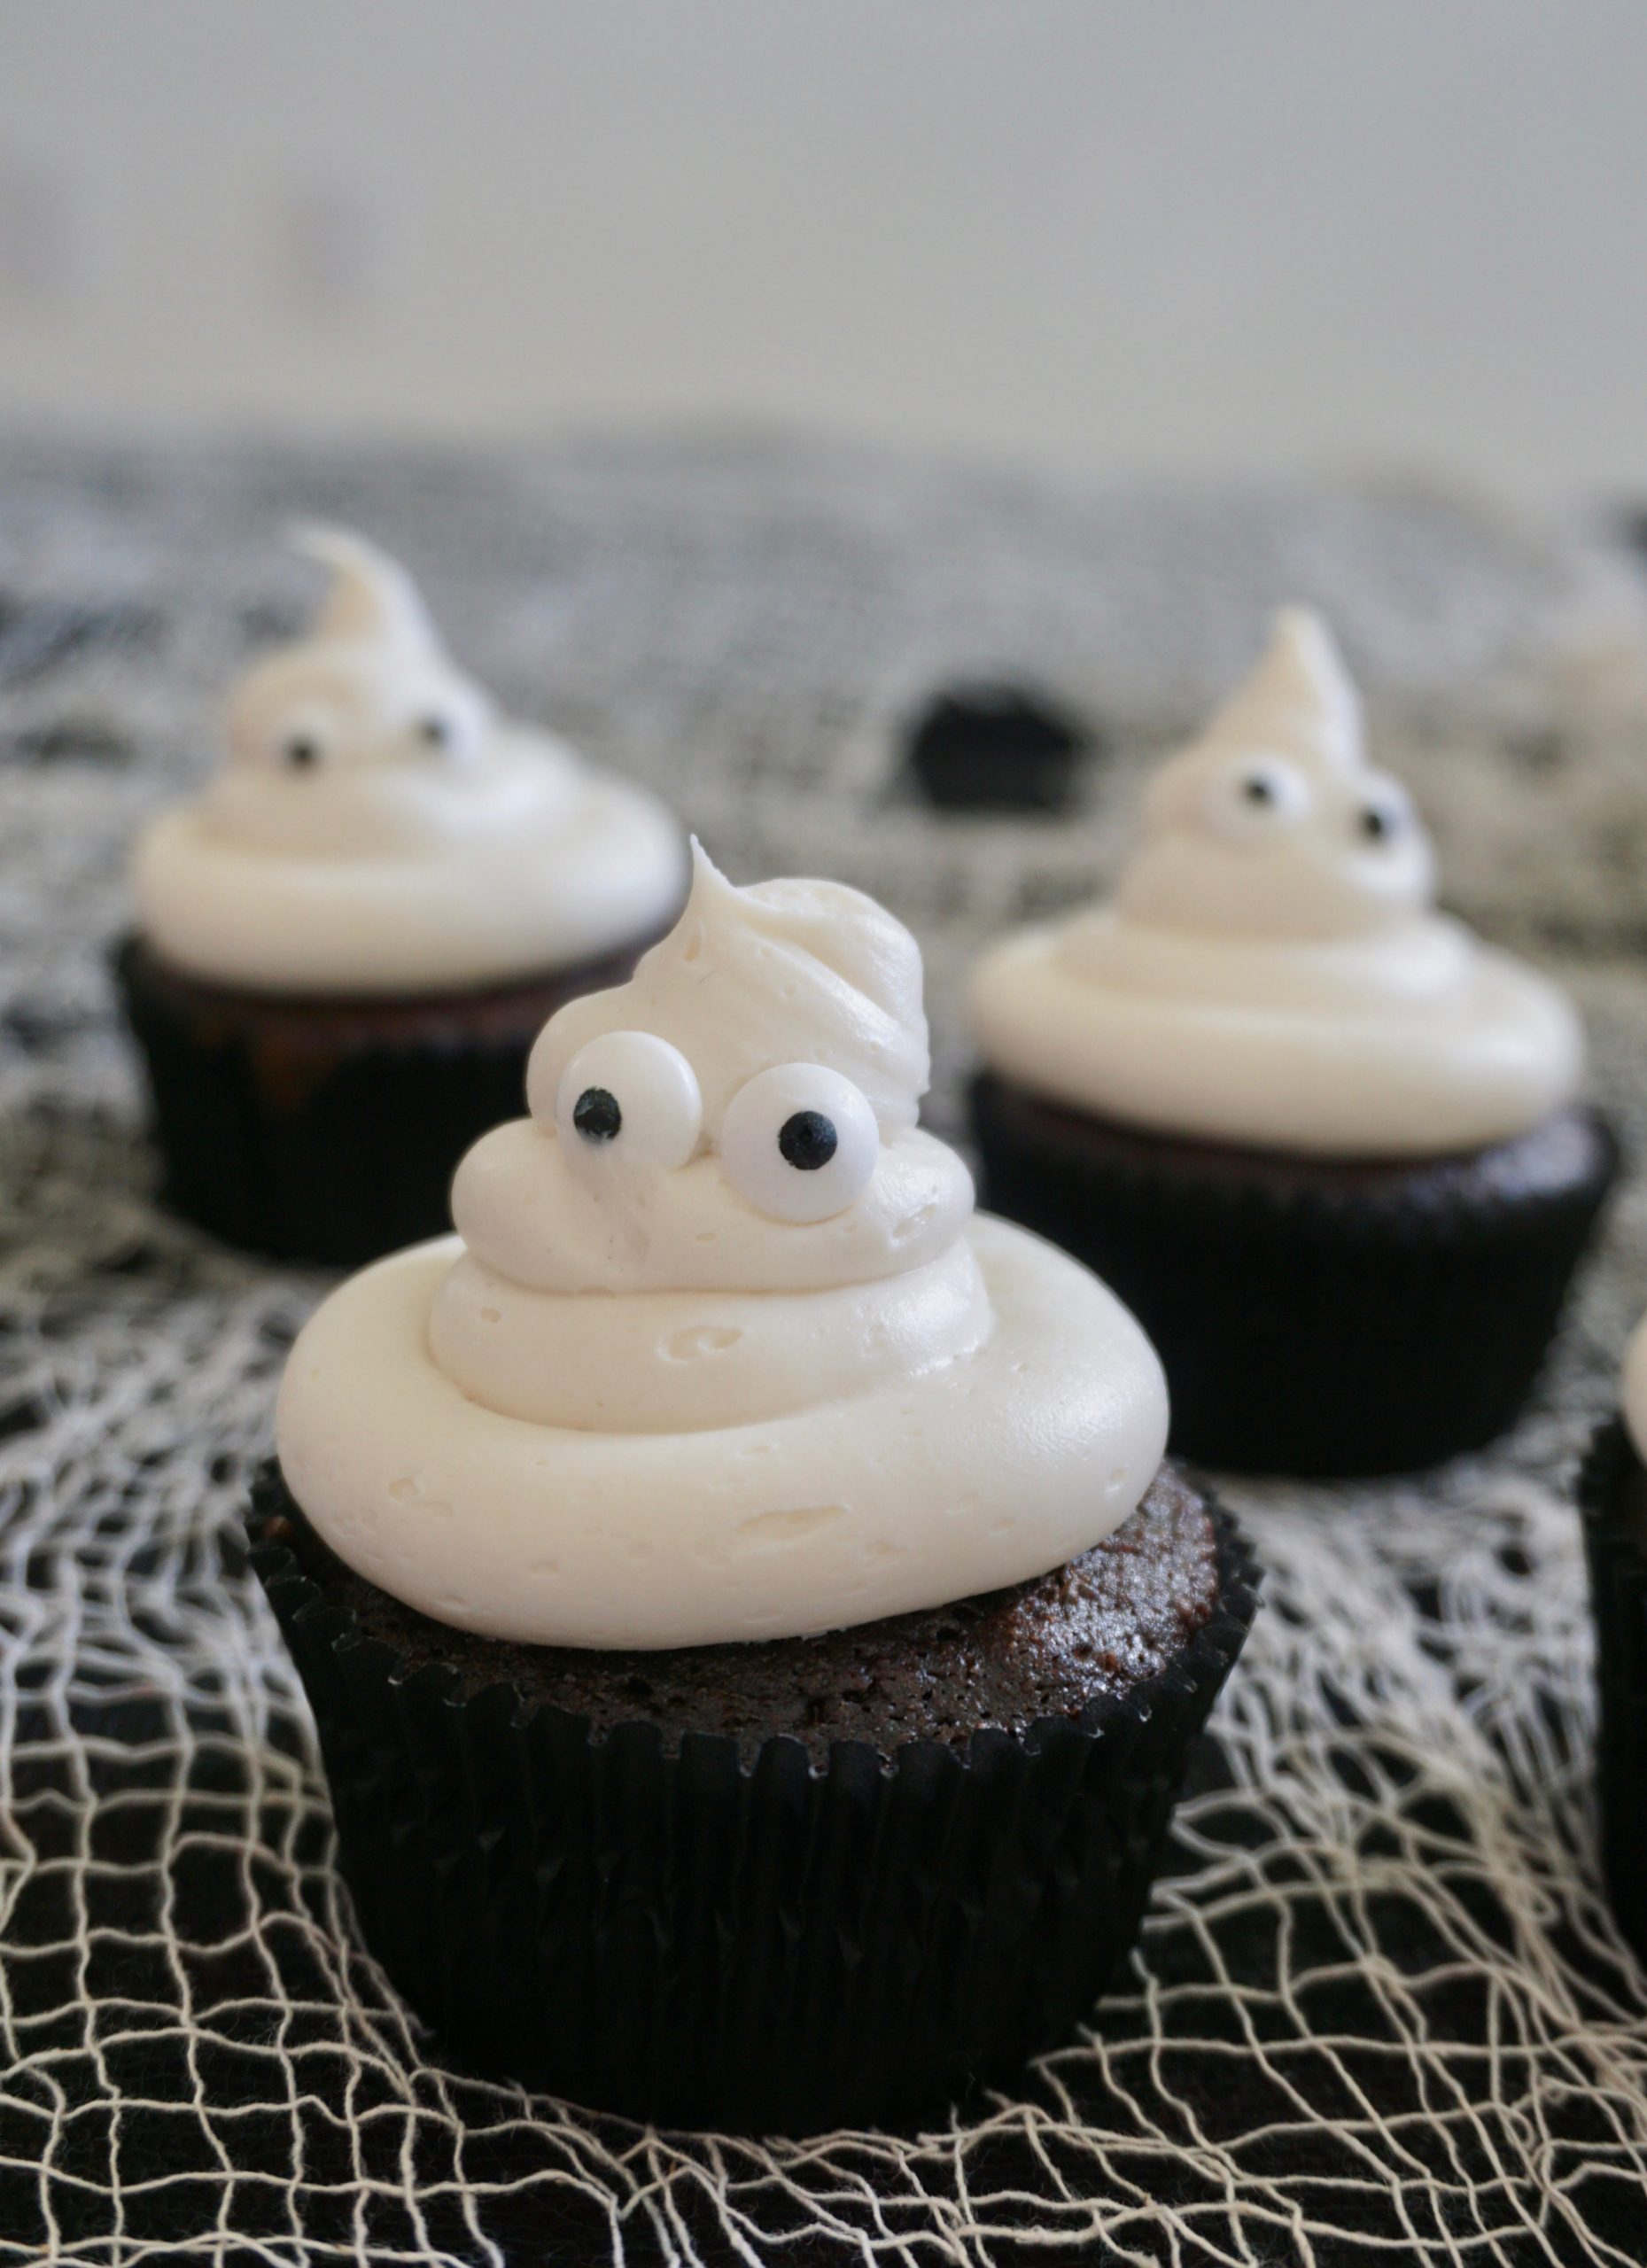 Ghost Halloween cupcakes